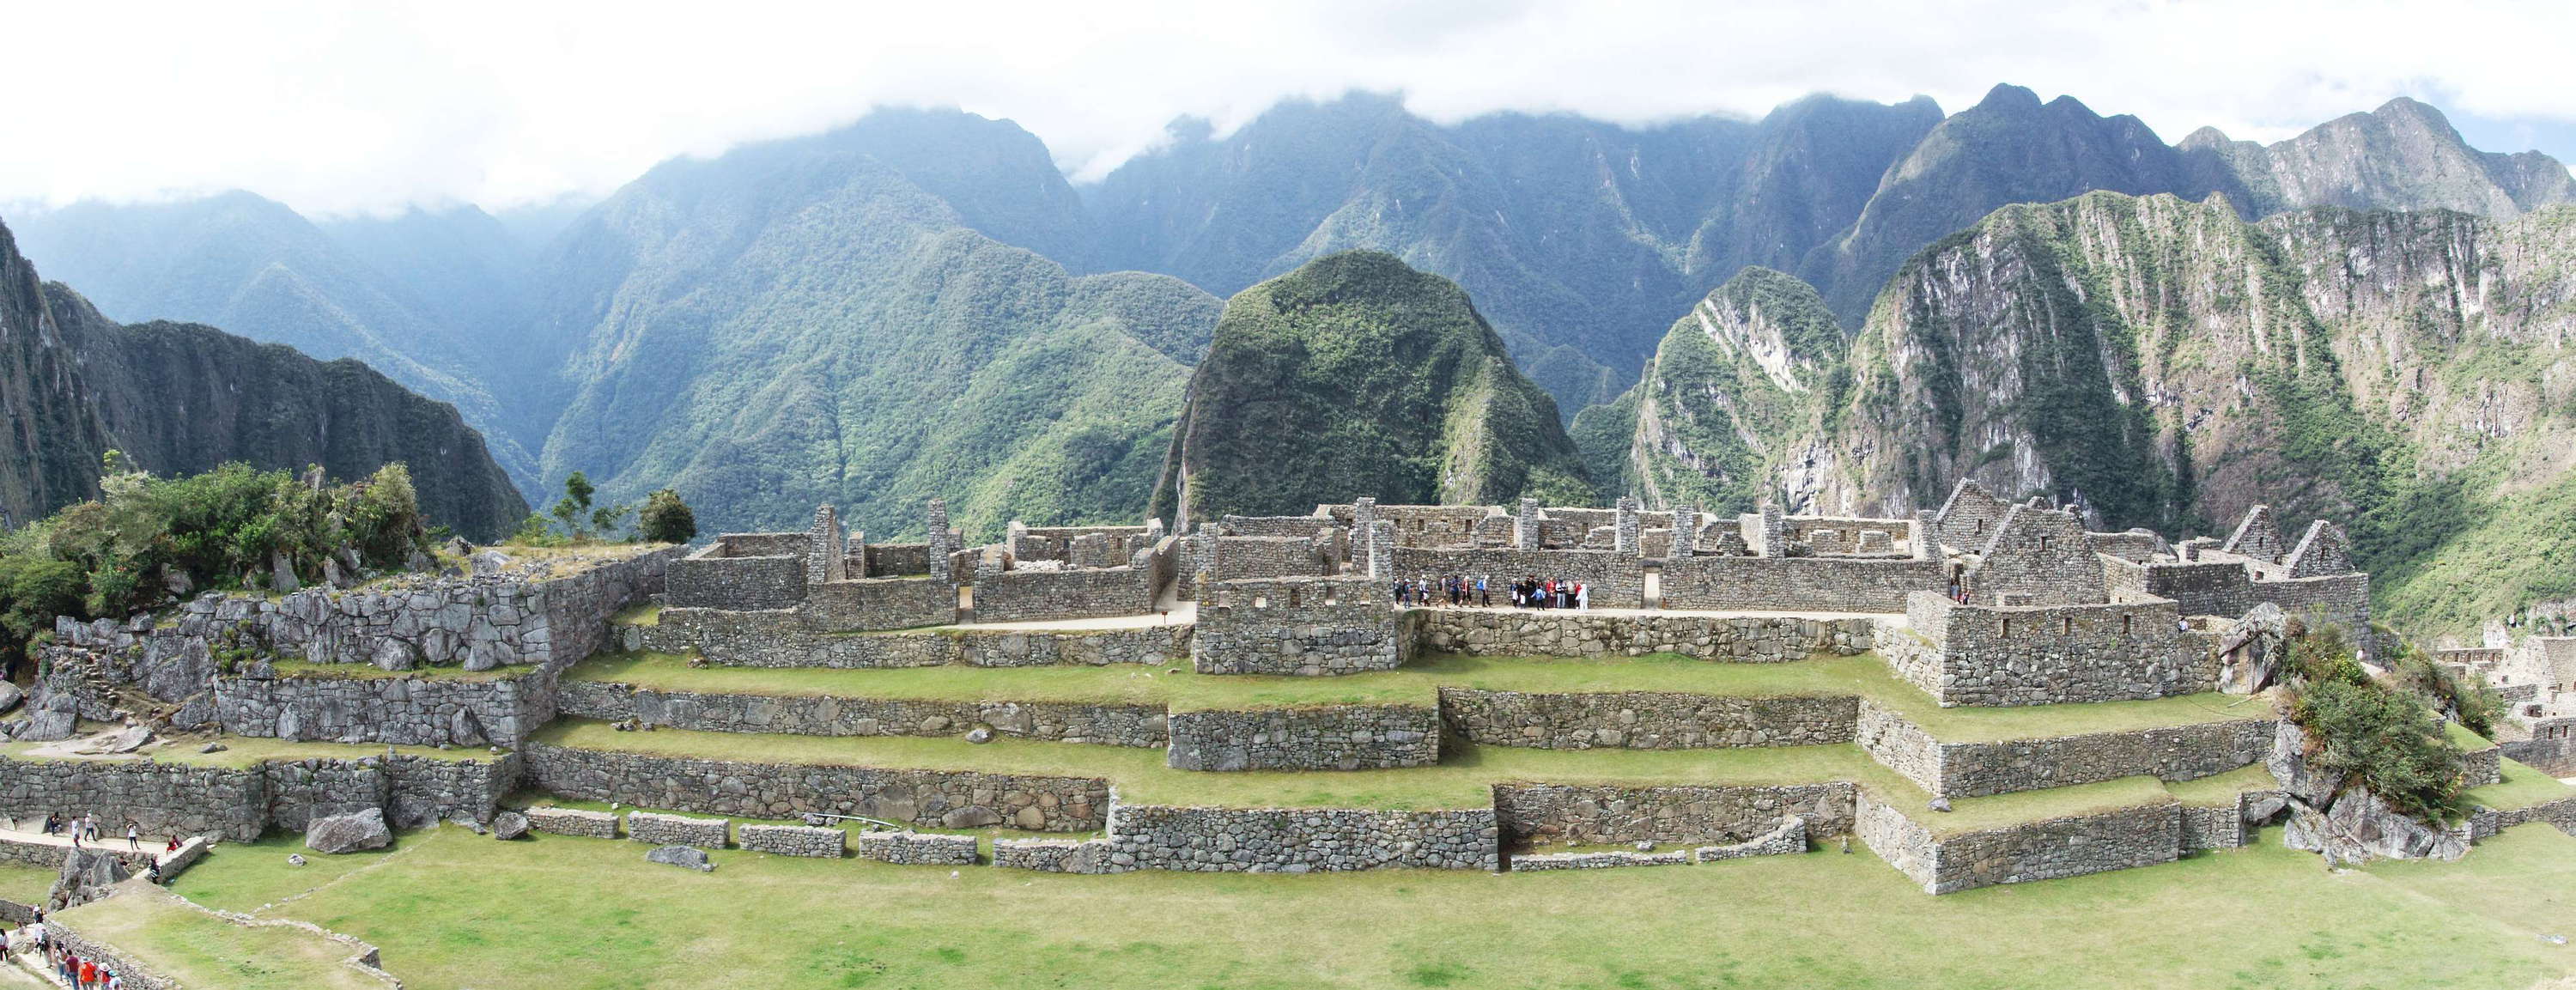 Machu Picchu | Intipampa and lower town